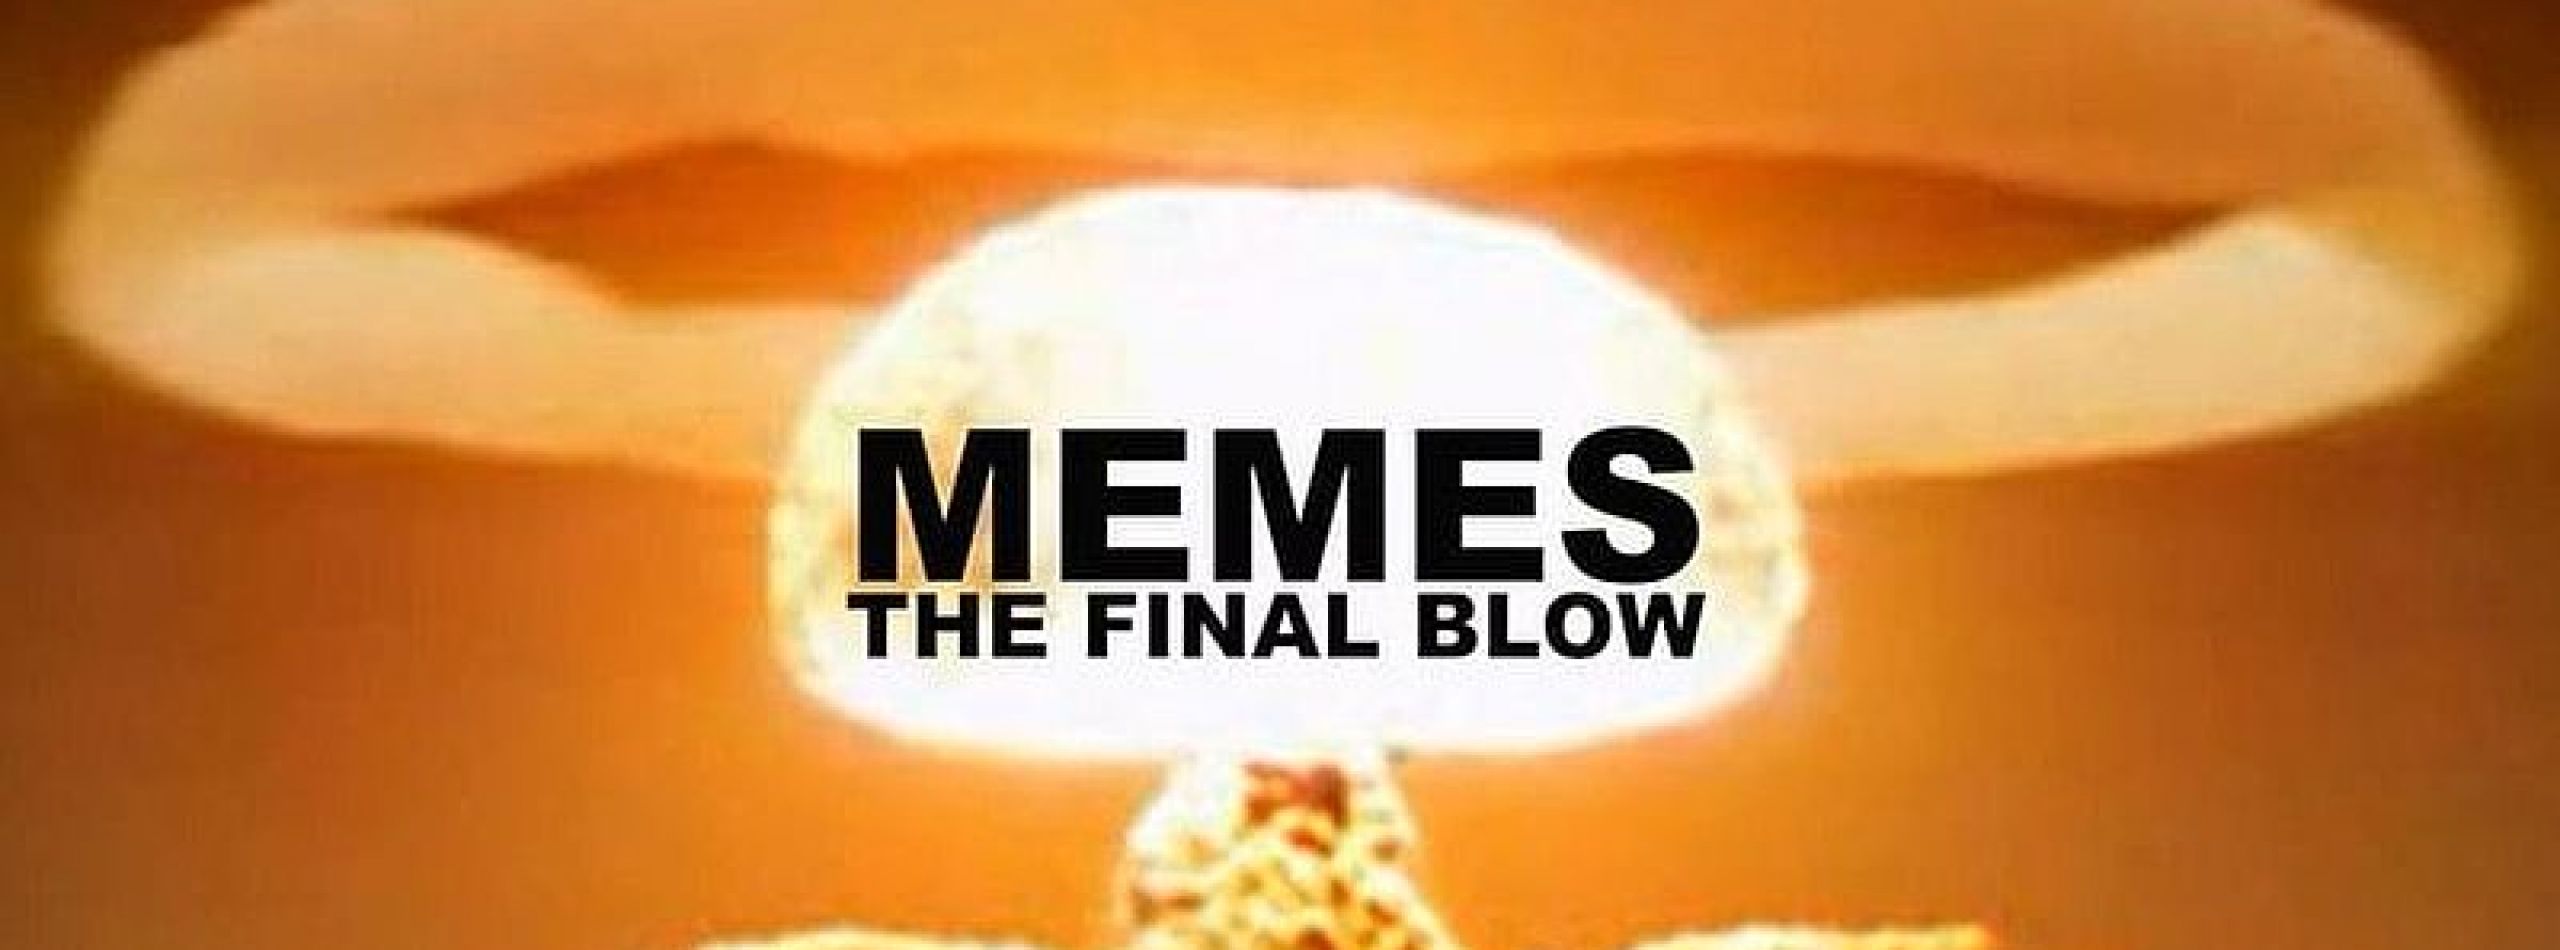 Memes – The Final Blow